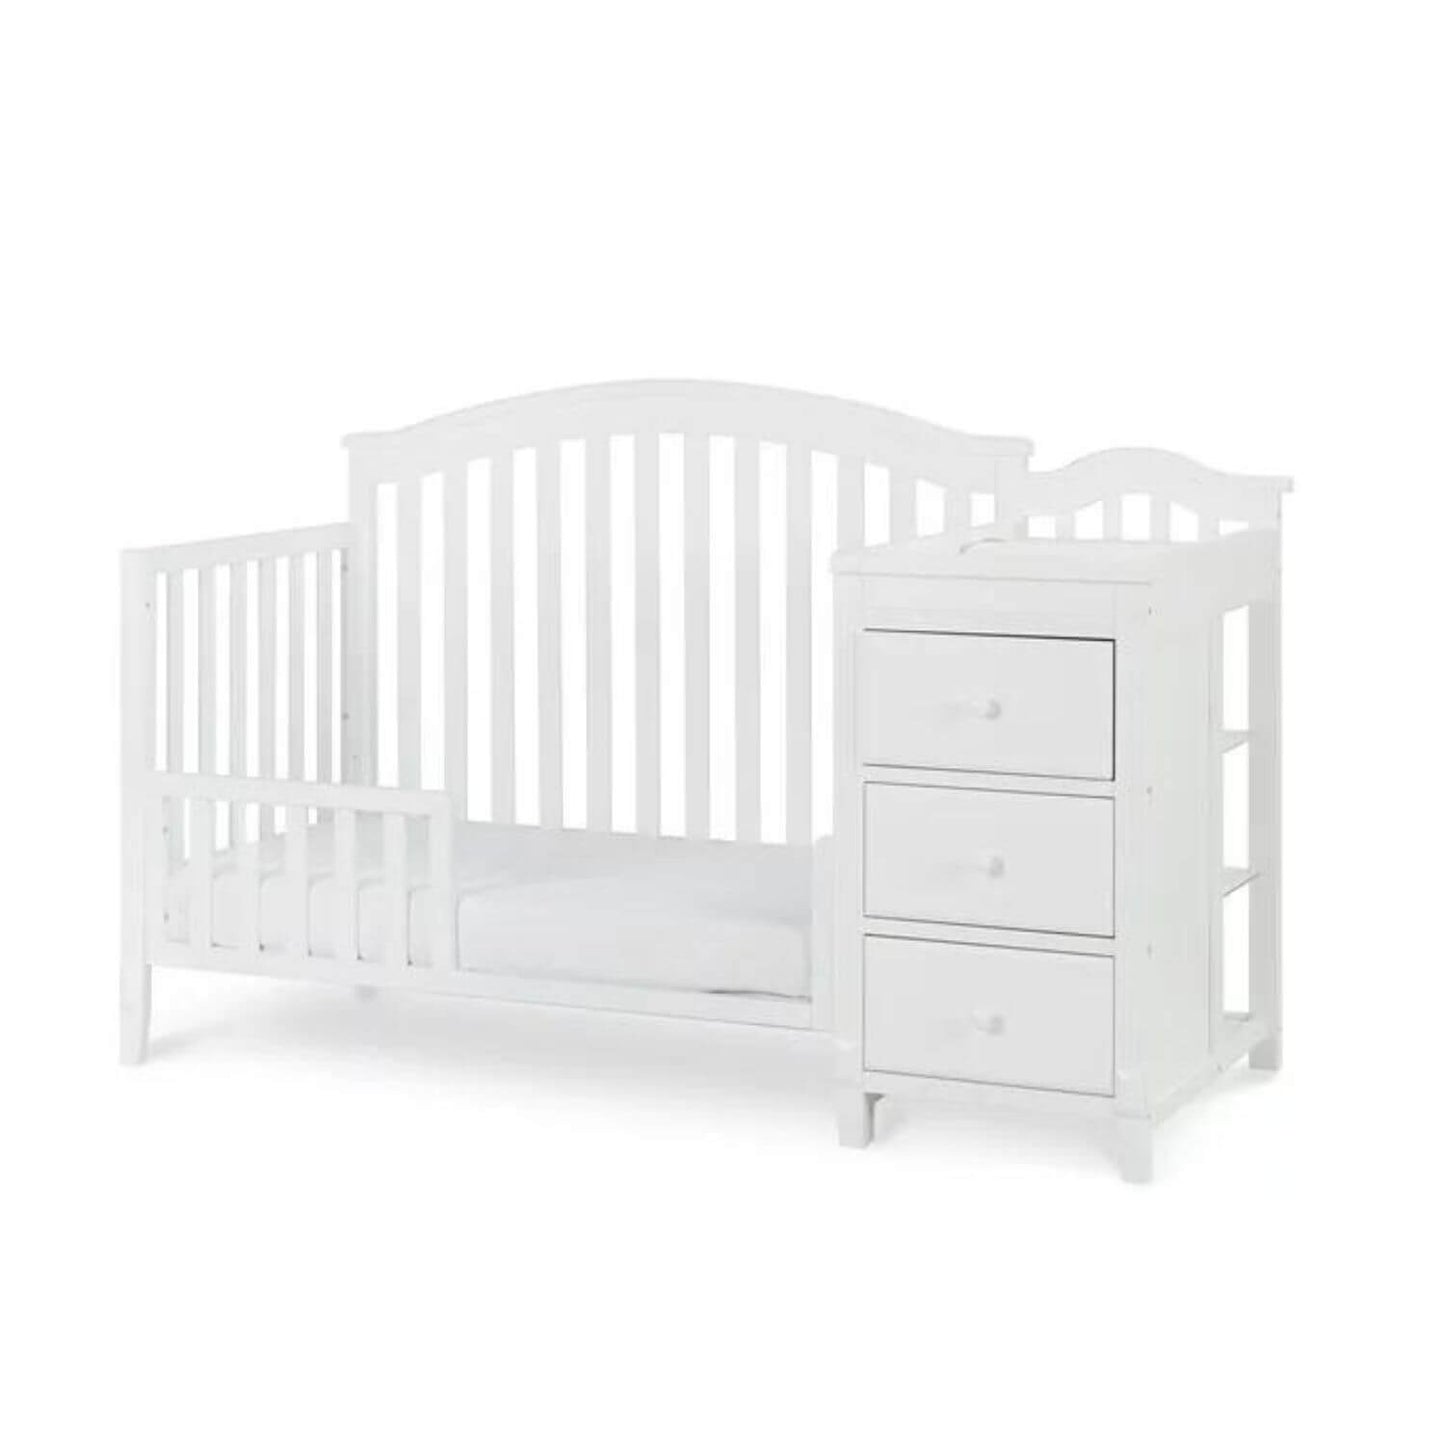 AFG Kali Toddler Bed Guardrail White